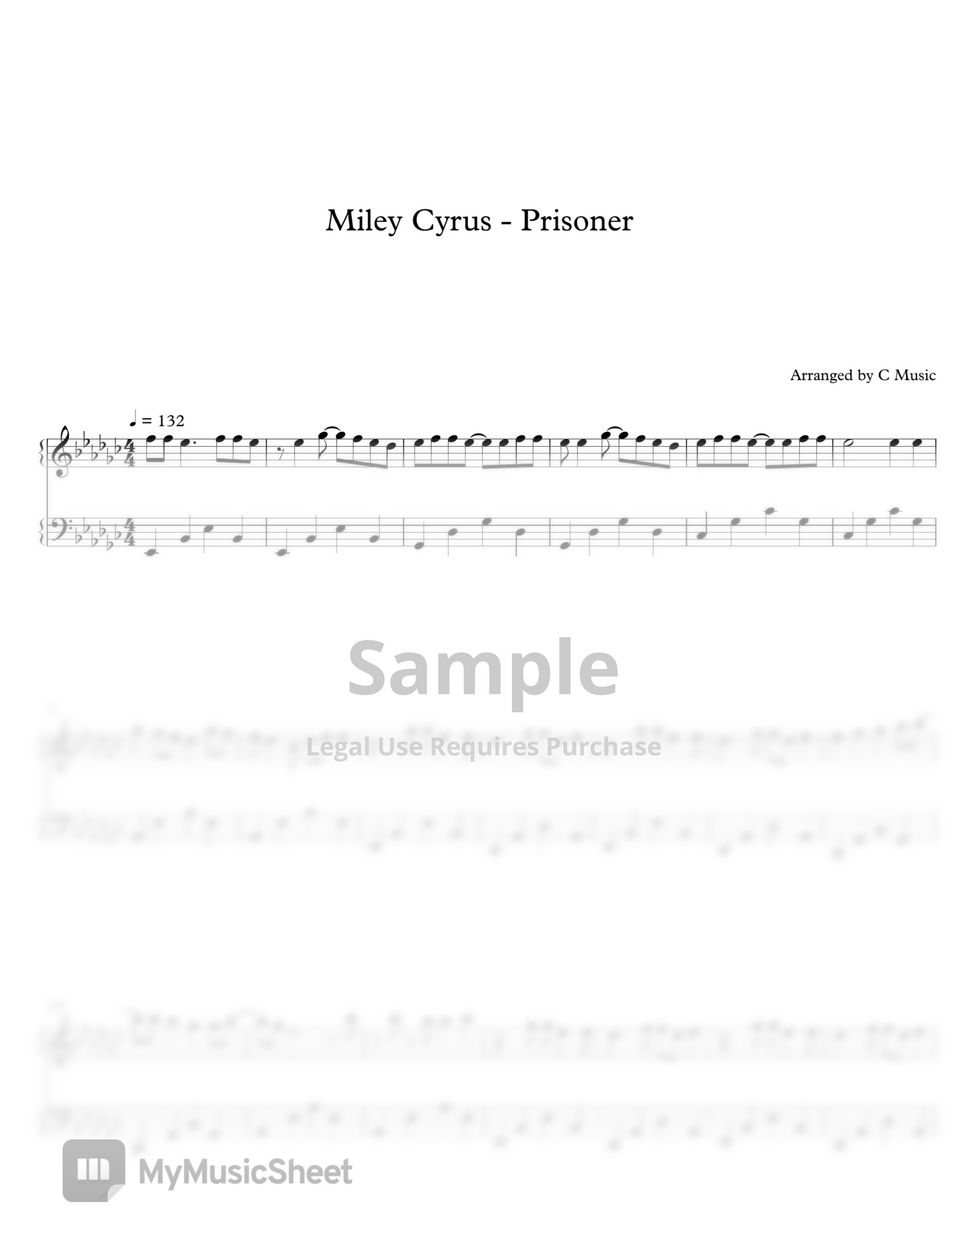 Miley Cyrus - Prisoner by C Music